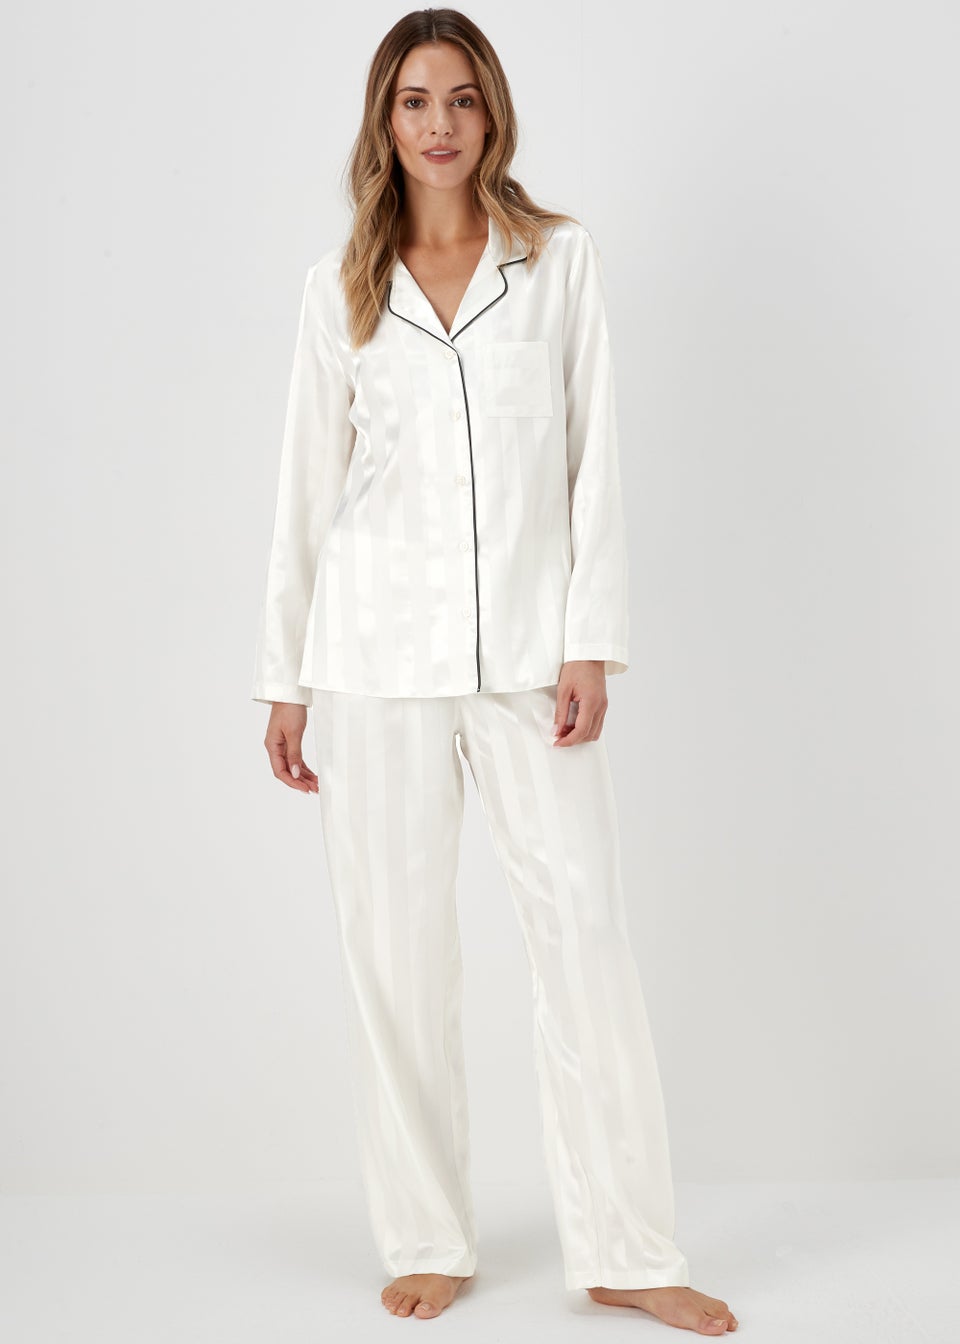 Cream Stripe Jacquard Satin Pyjama Set - Matalan